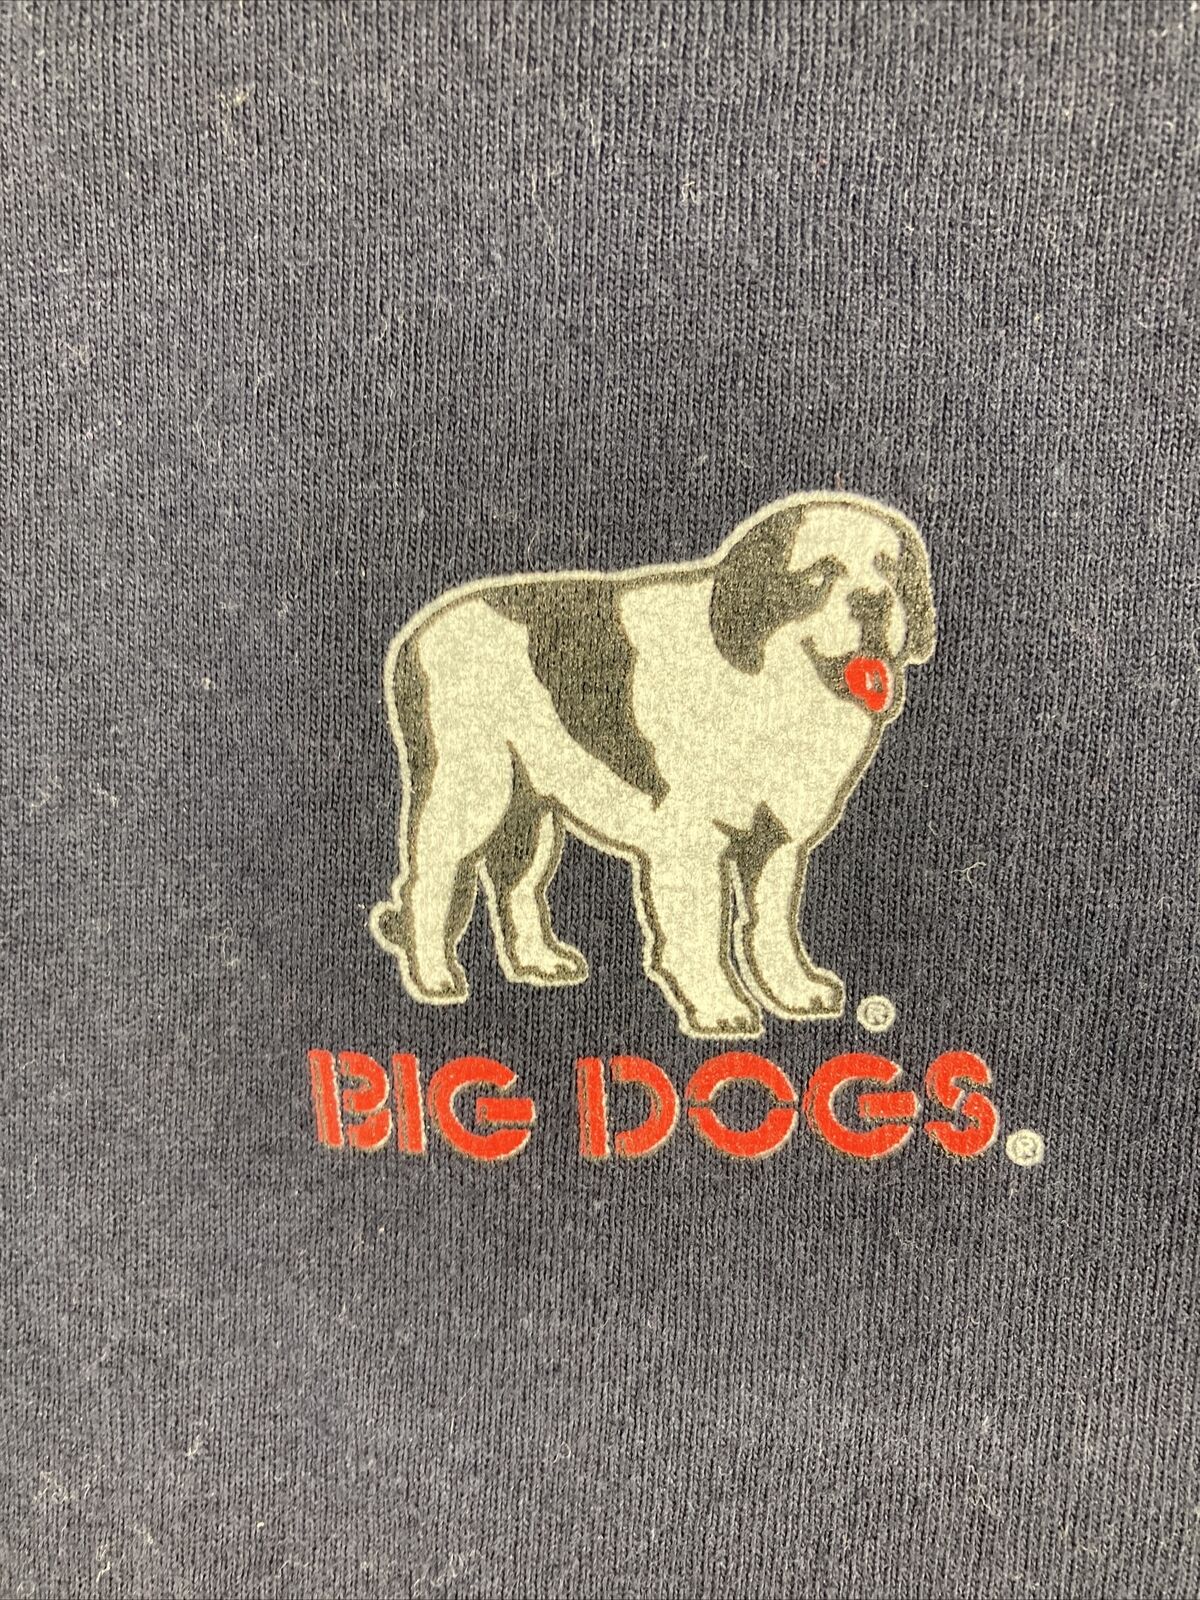 Big Dogs Logo 100% Cotton Navy T-Shirt-Men's Size S/M